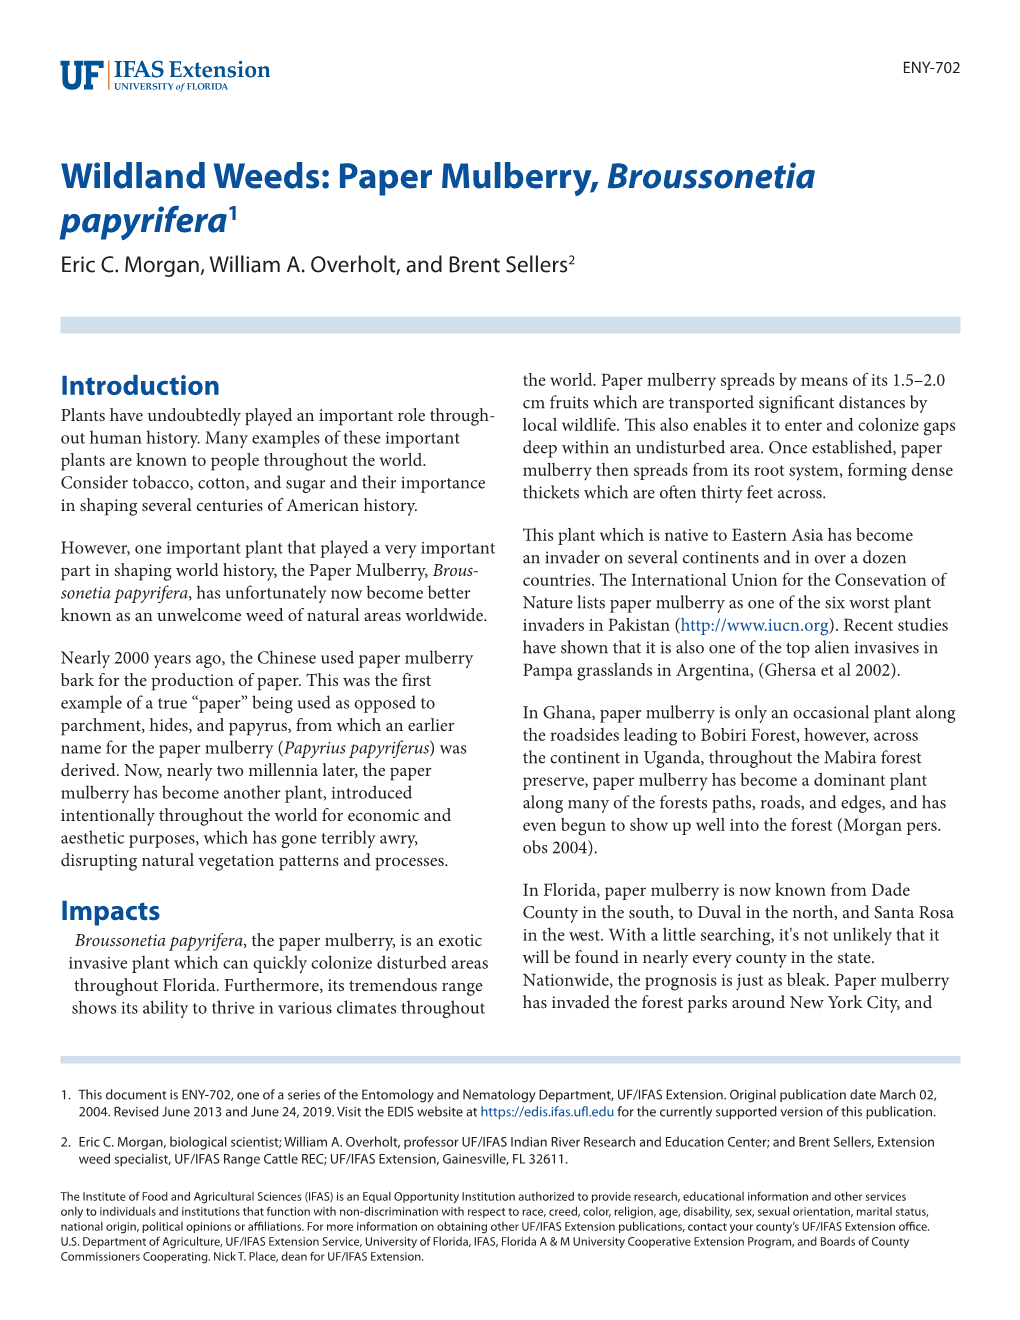 Paper Mulberry, Broussonetia Papyrifera1 Eric C